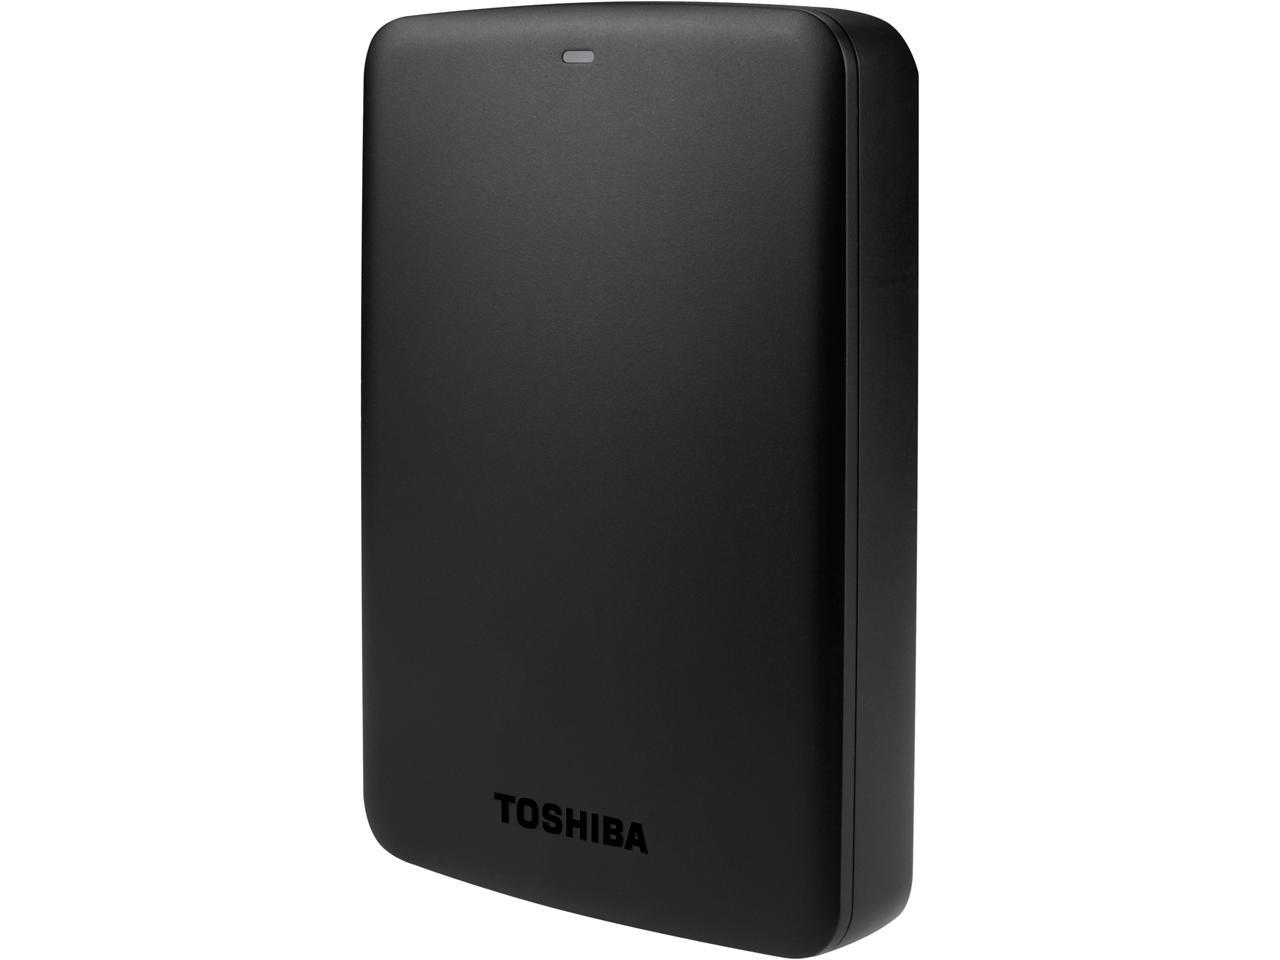  Toshiba Canvio Basics 1TB Portable External Hard Drive 2.5 Inch  USB 3.0 - Black - HDTB310EK3AA : Electronics